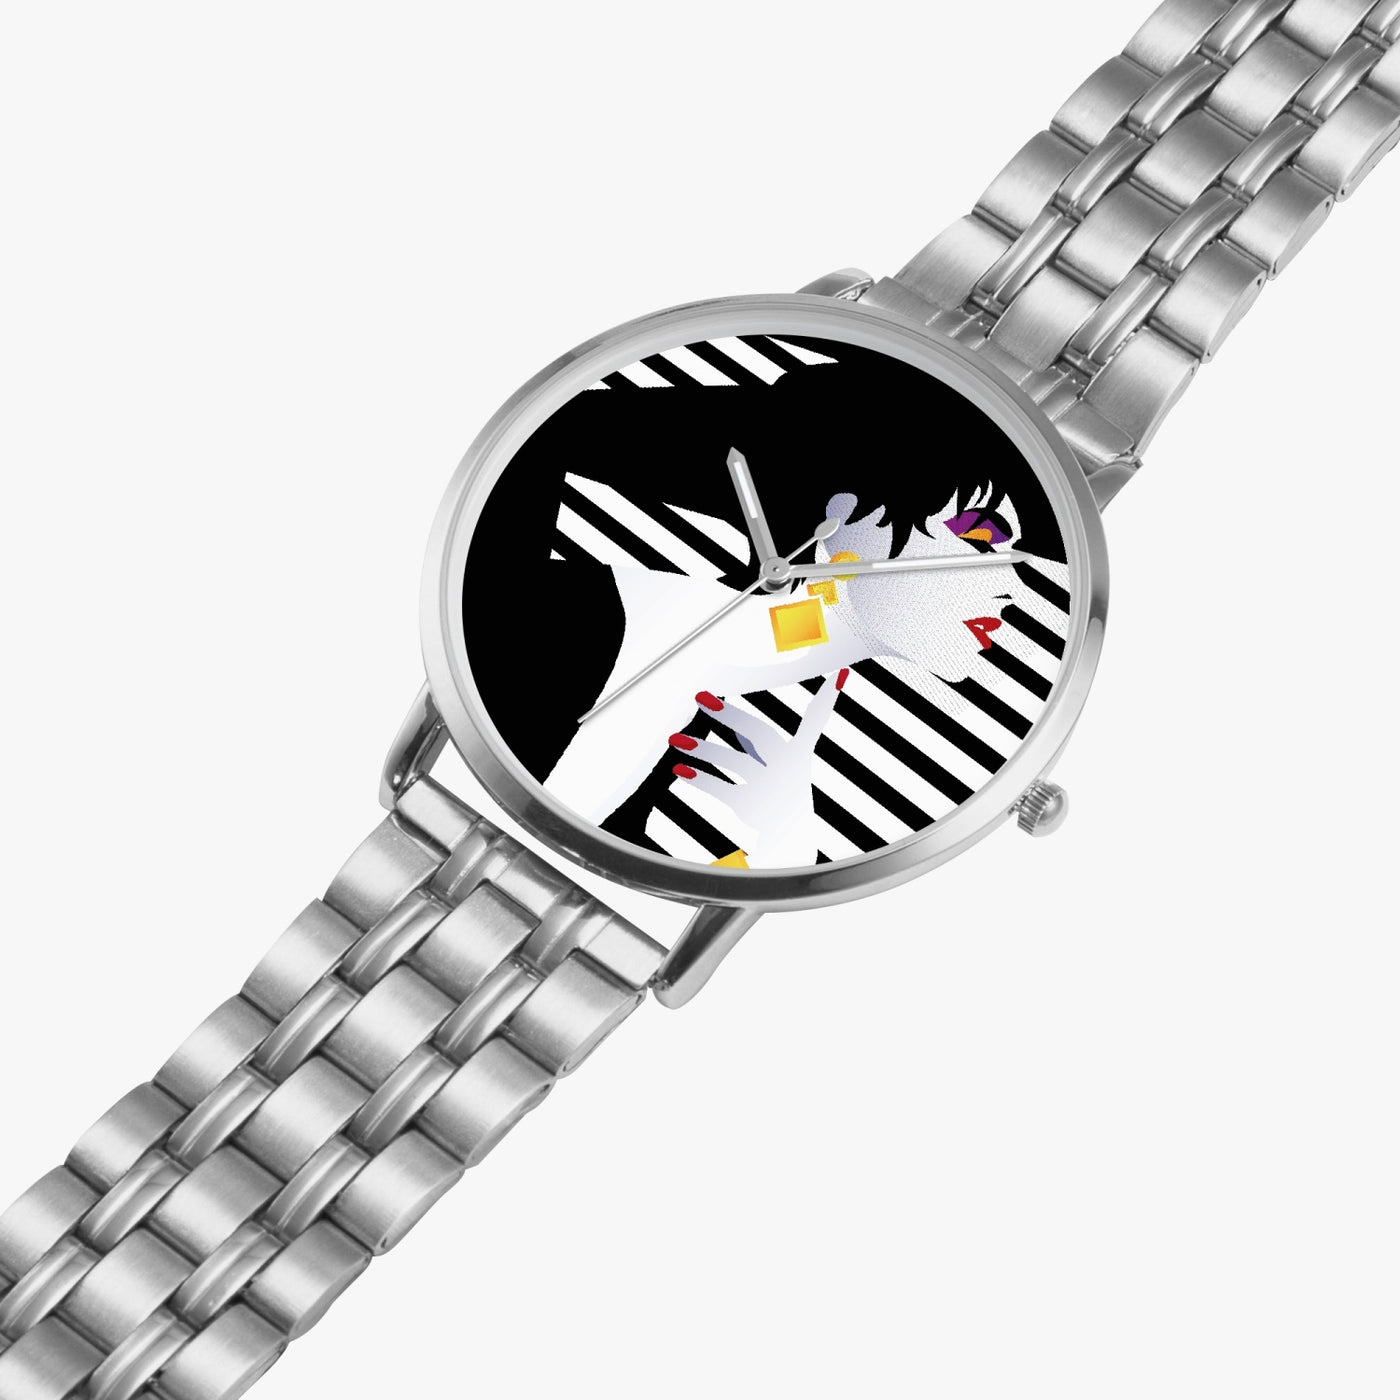 Retro Chic II - Instafamous Steel Strap Quartz watch